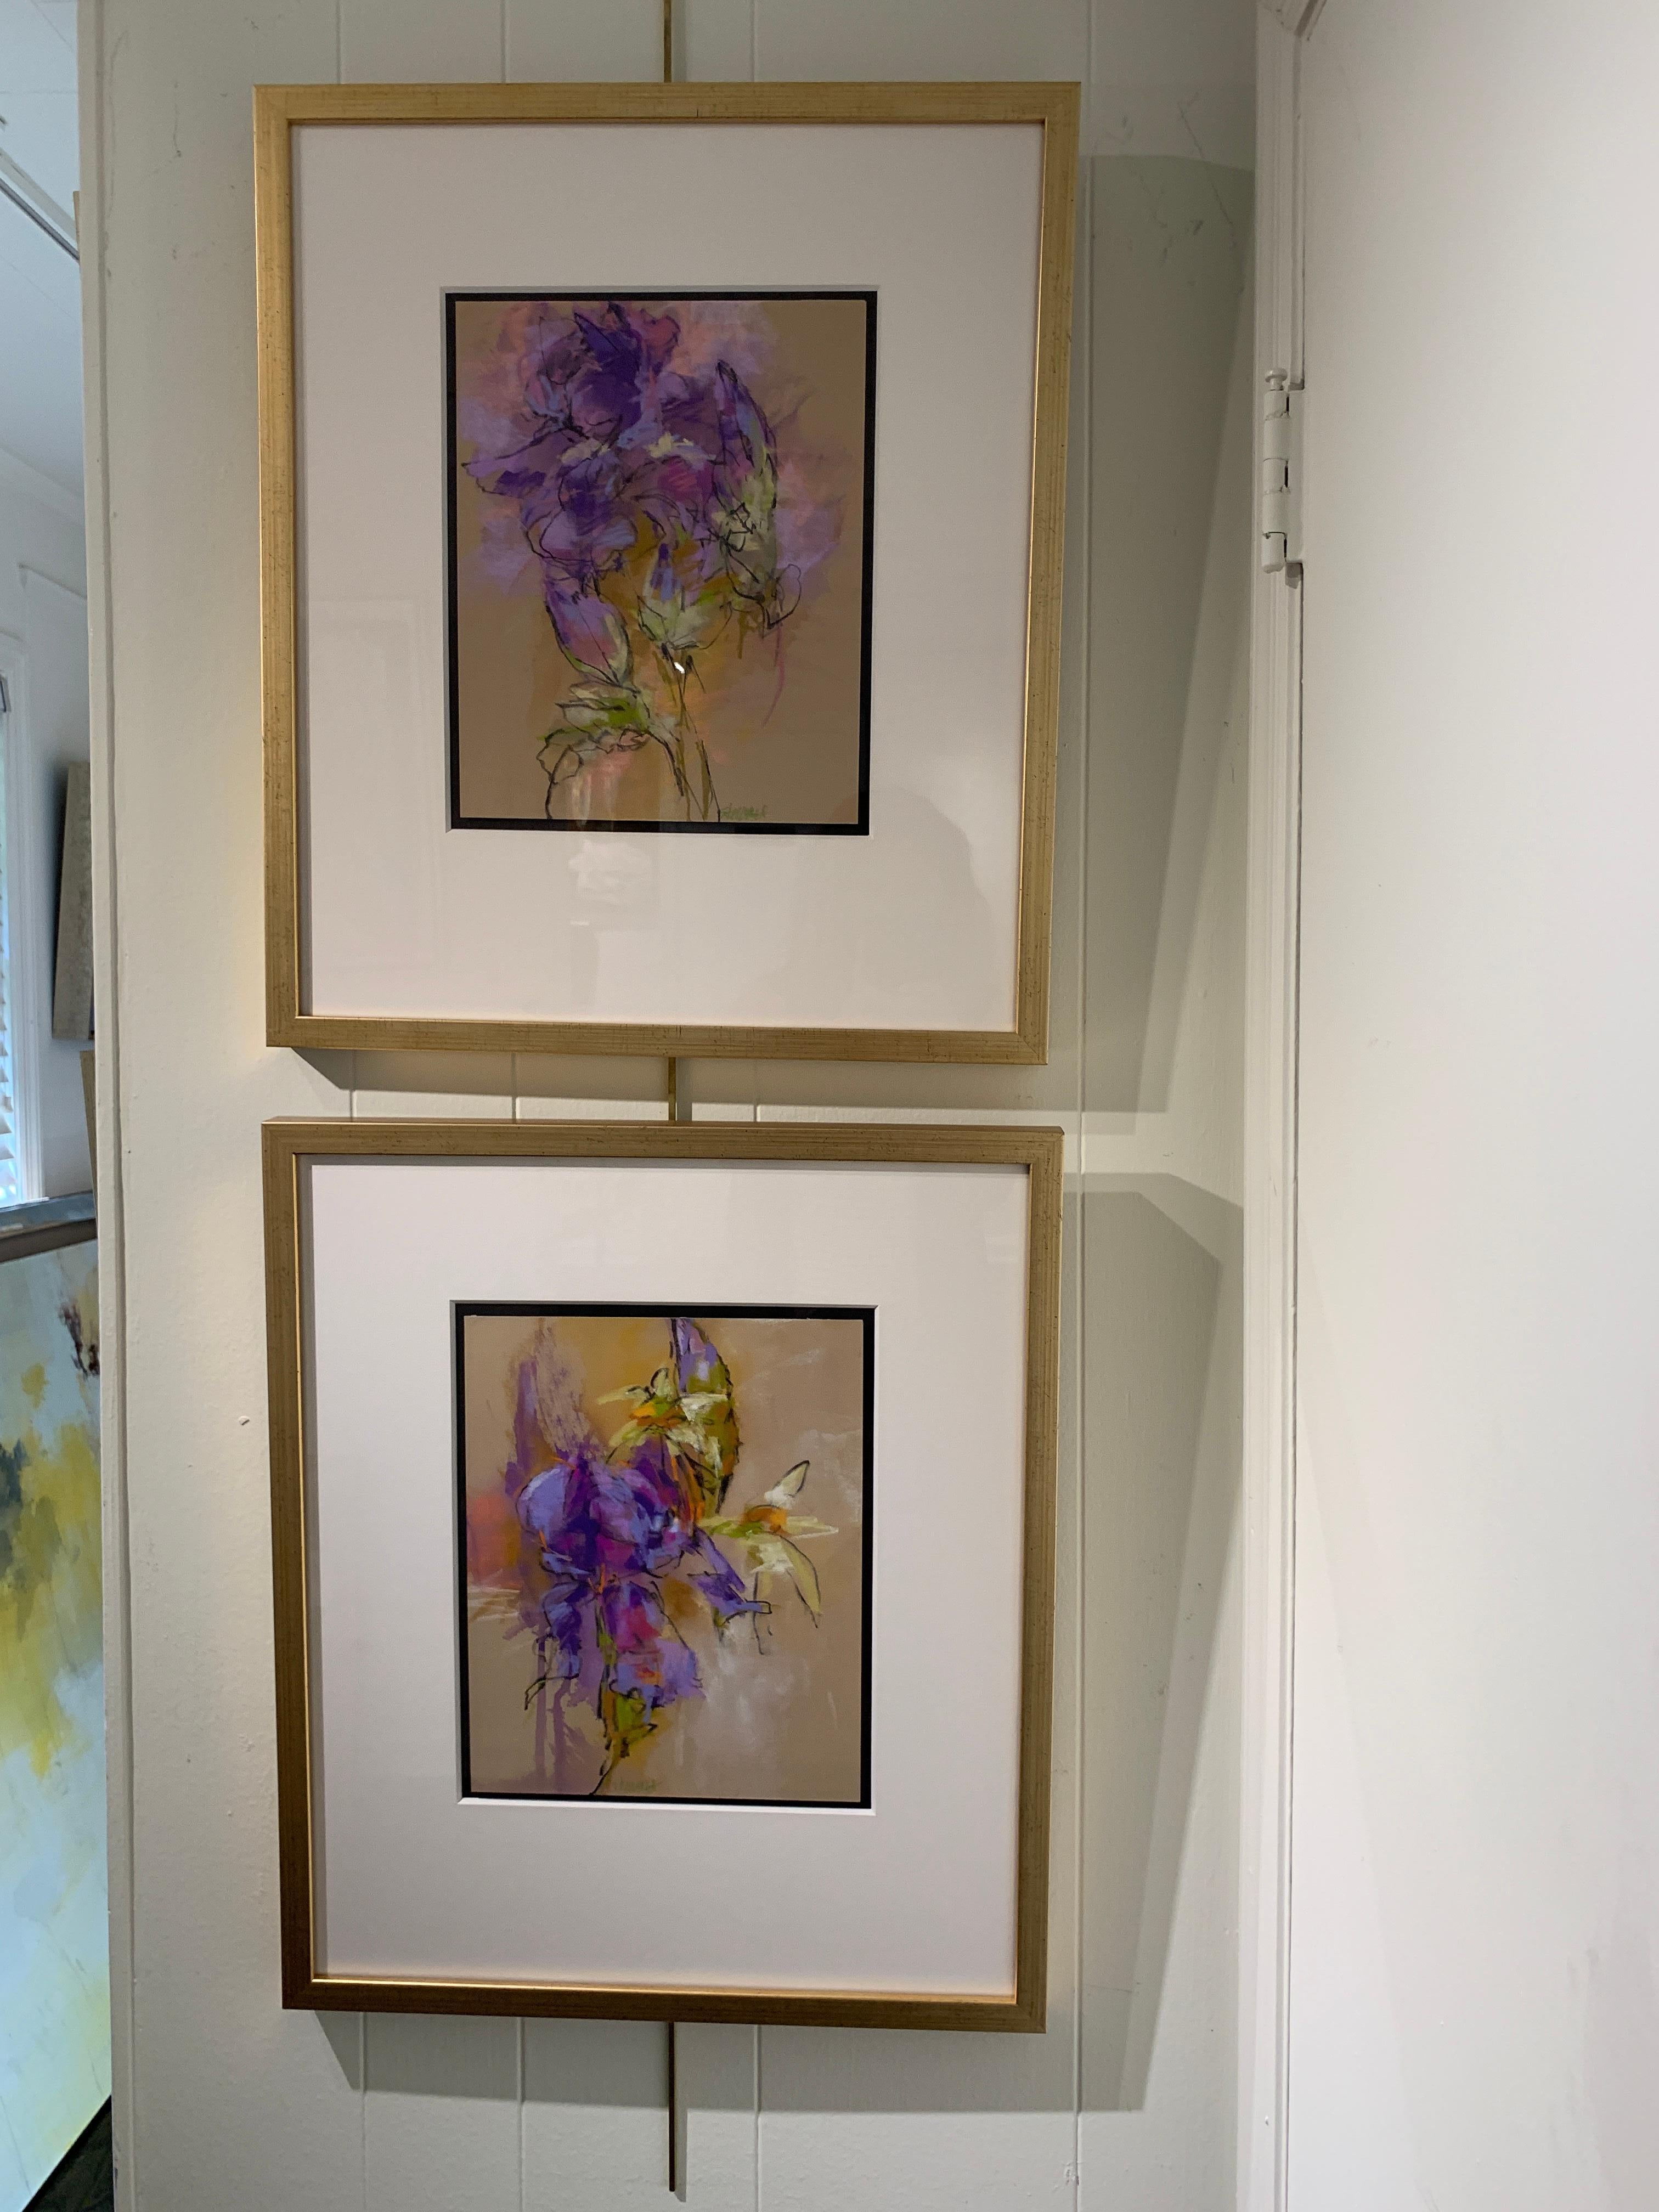 Monet's Irises II by Debora Stewart, Framed Pastel and Mixed Media Work on Paper 1